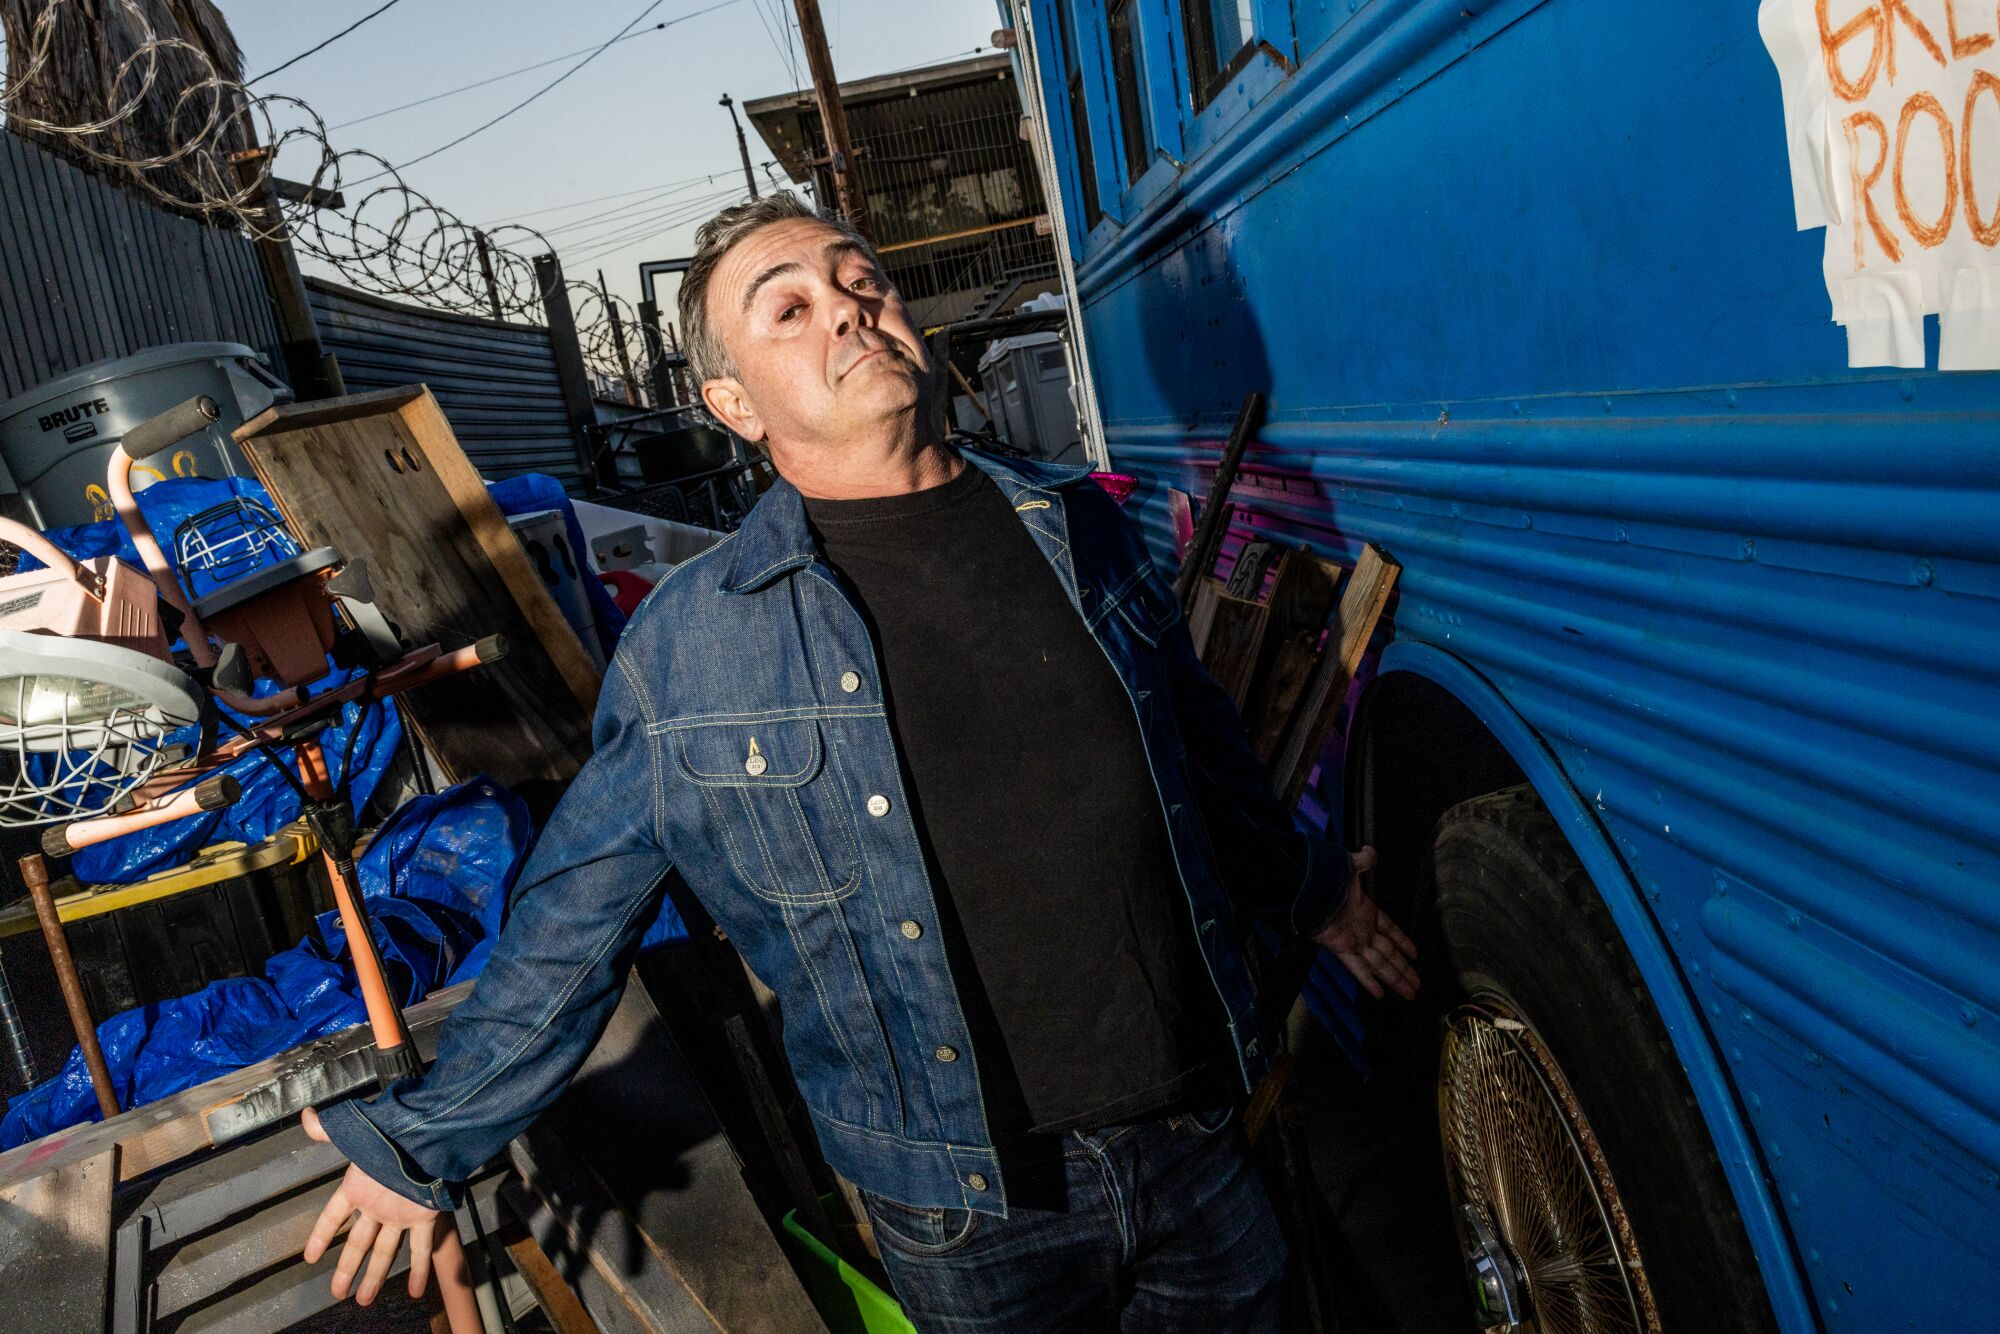 A man wearing a denim jacket poses outside a blue vehicle.